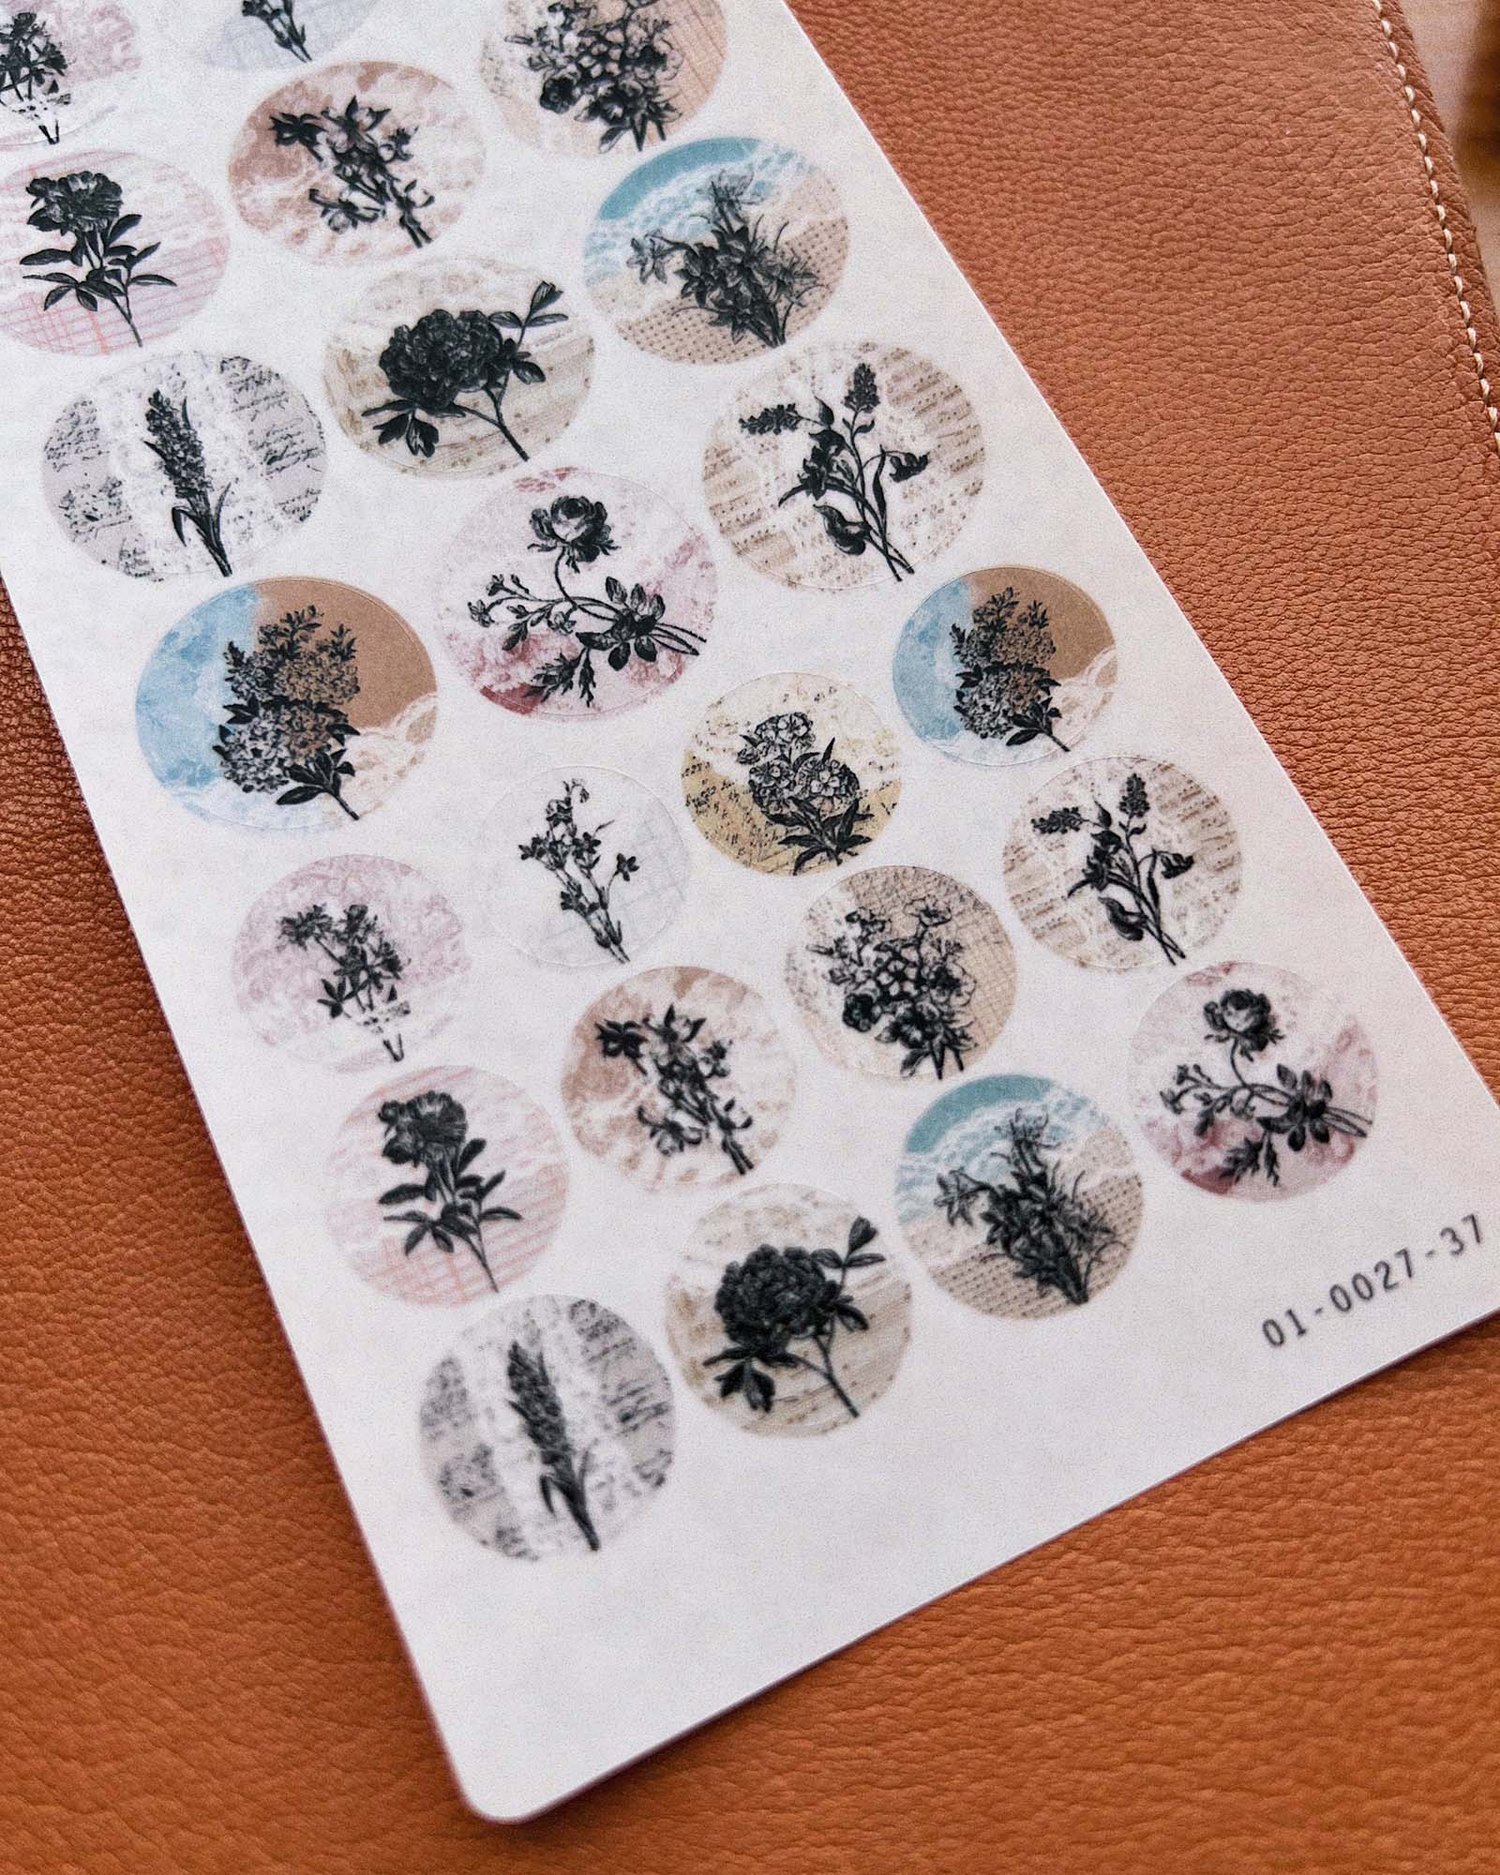 Midautumn Wildflowers Stickers — Sarica Studio